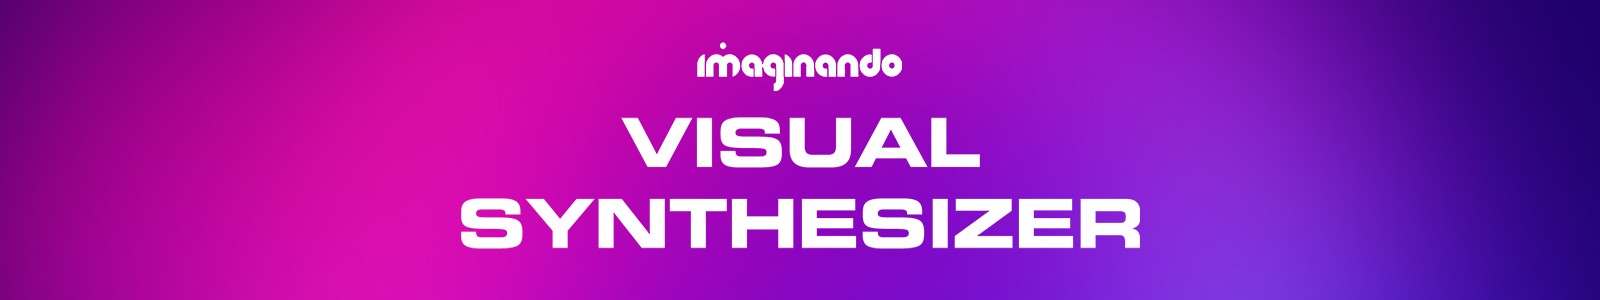 Visual Synthesizer by Imaginando